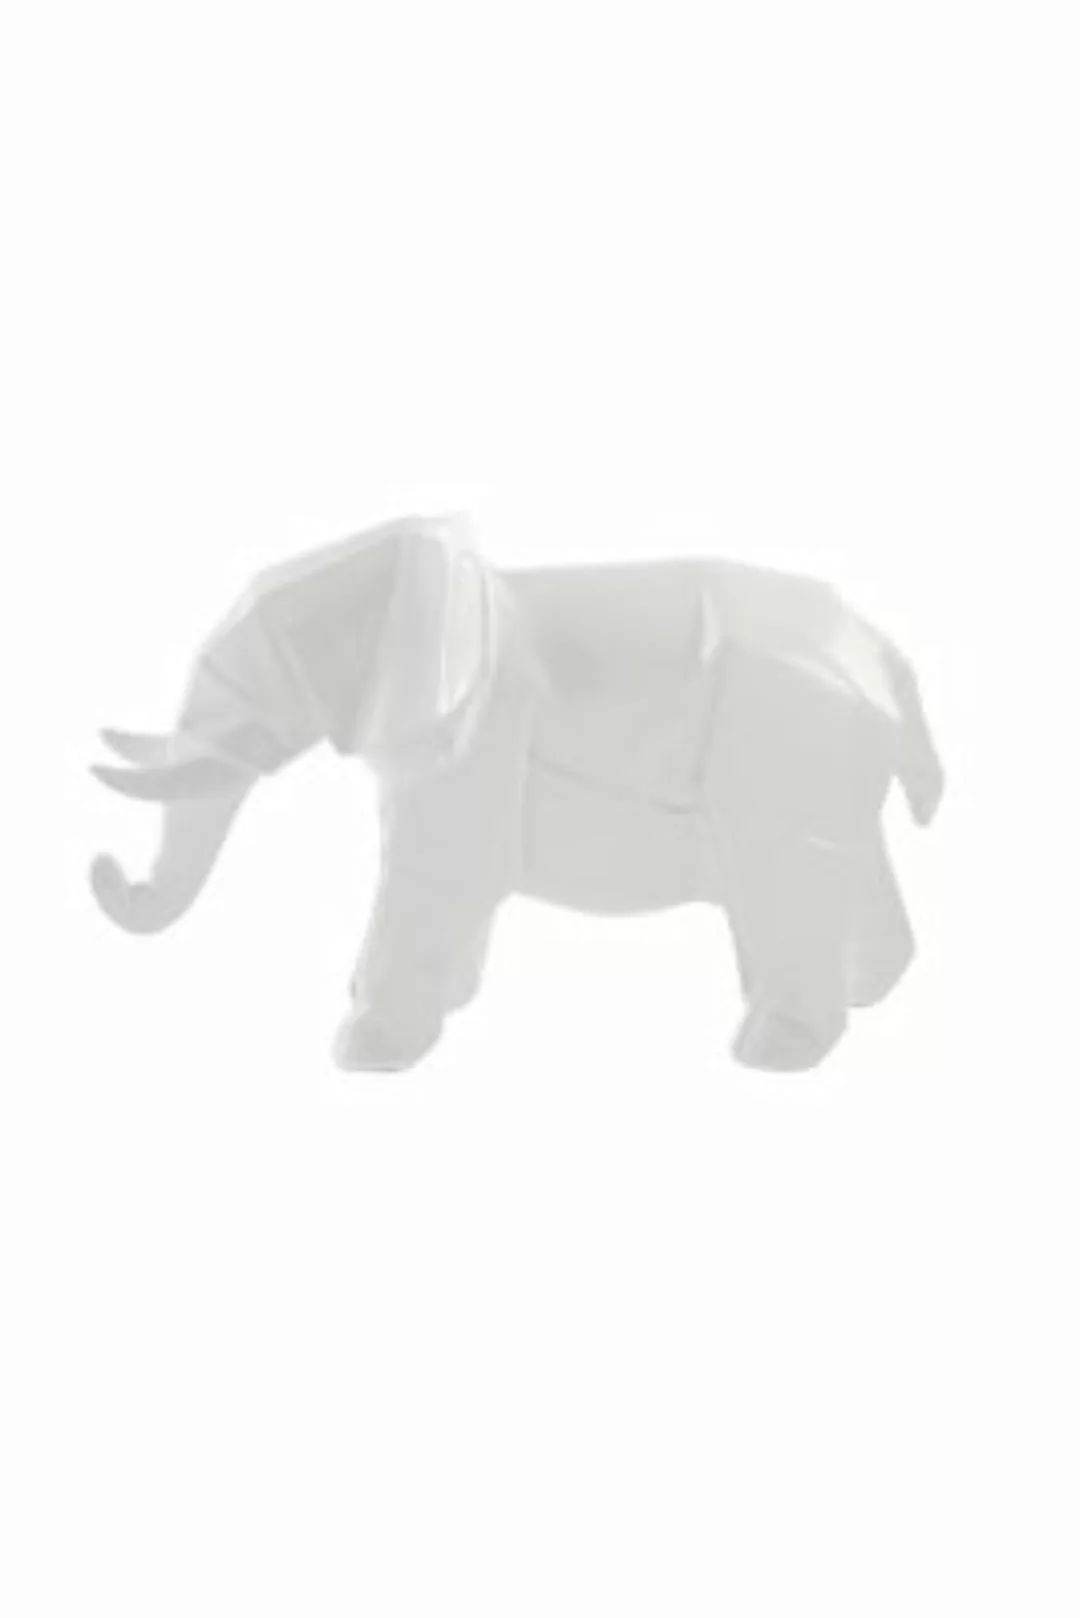 Kayoom Dekofiguren Skulptur Elephant 120 weiß günstig online kaufen